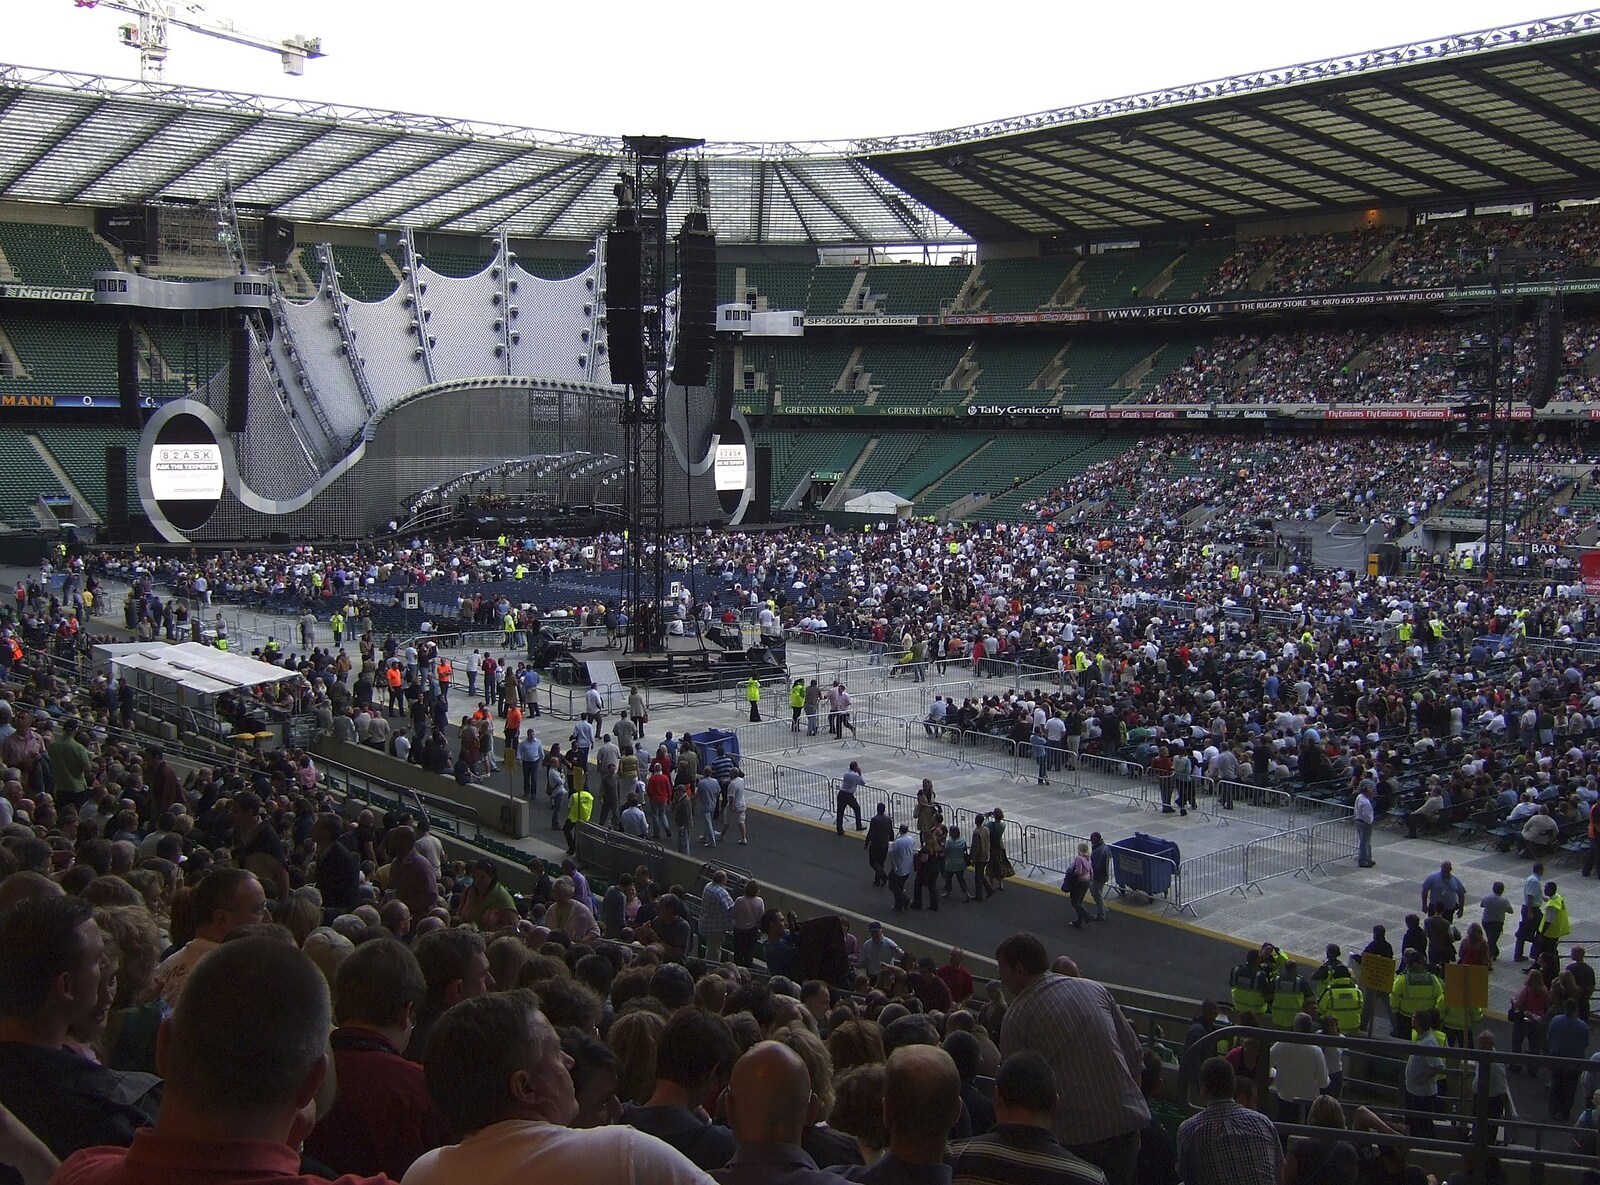 Genesis Live at Twickenham, and Music on Parker's Piece, London and Cambridge - 8th July 2007: Twickenham Stadium fills up